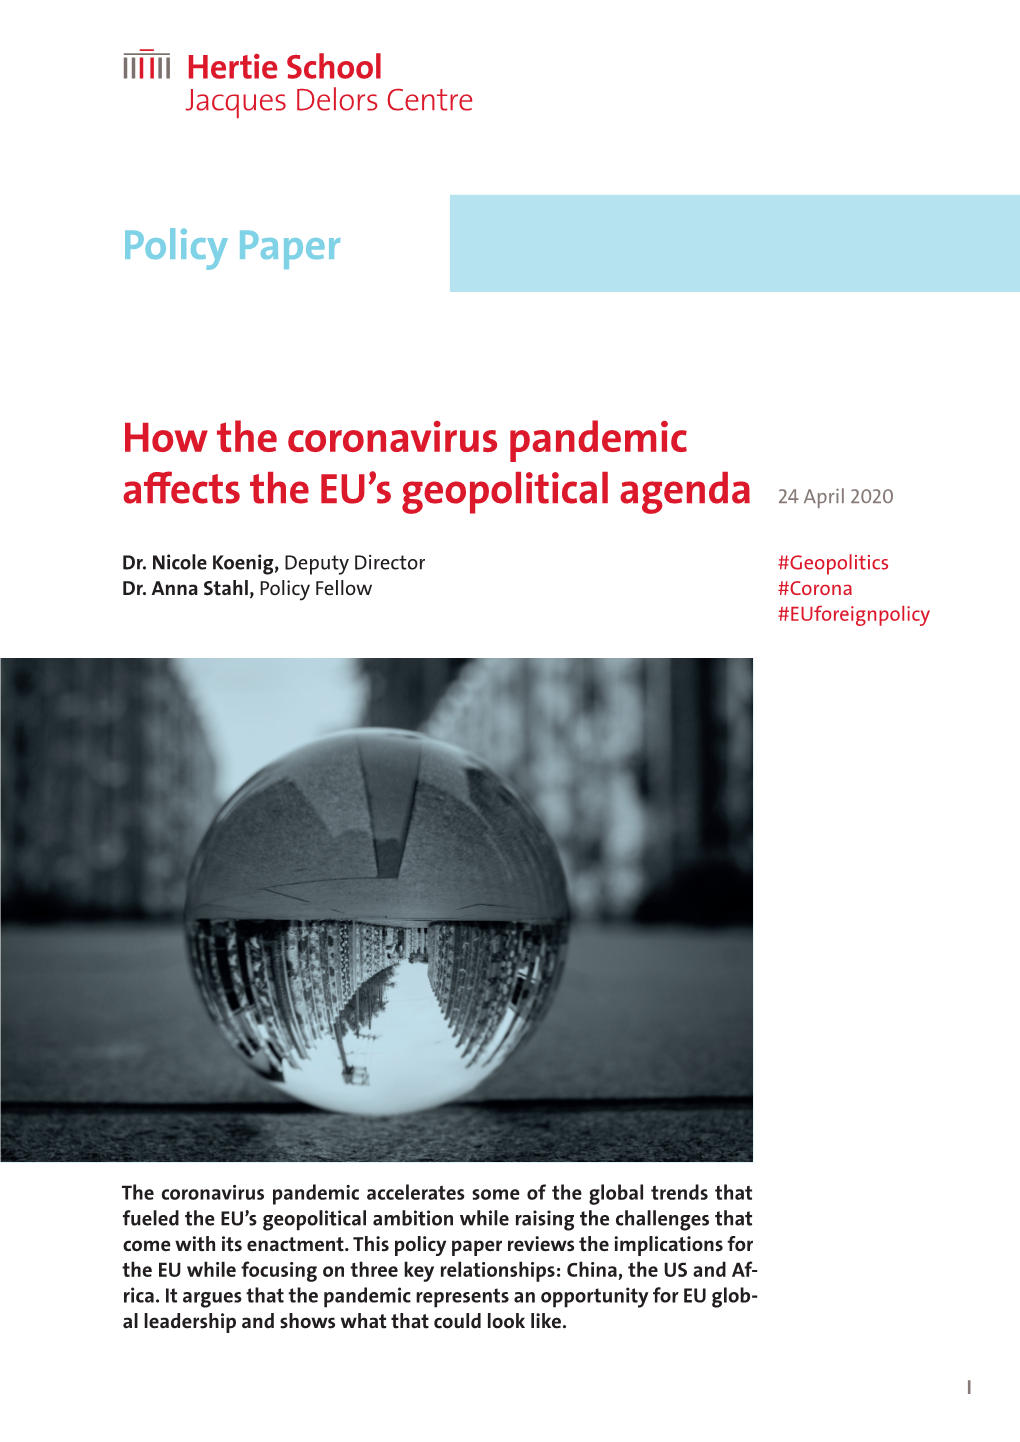 How the Coronavirus Pandemic Affects the EU's Geopolitical Agenda